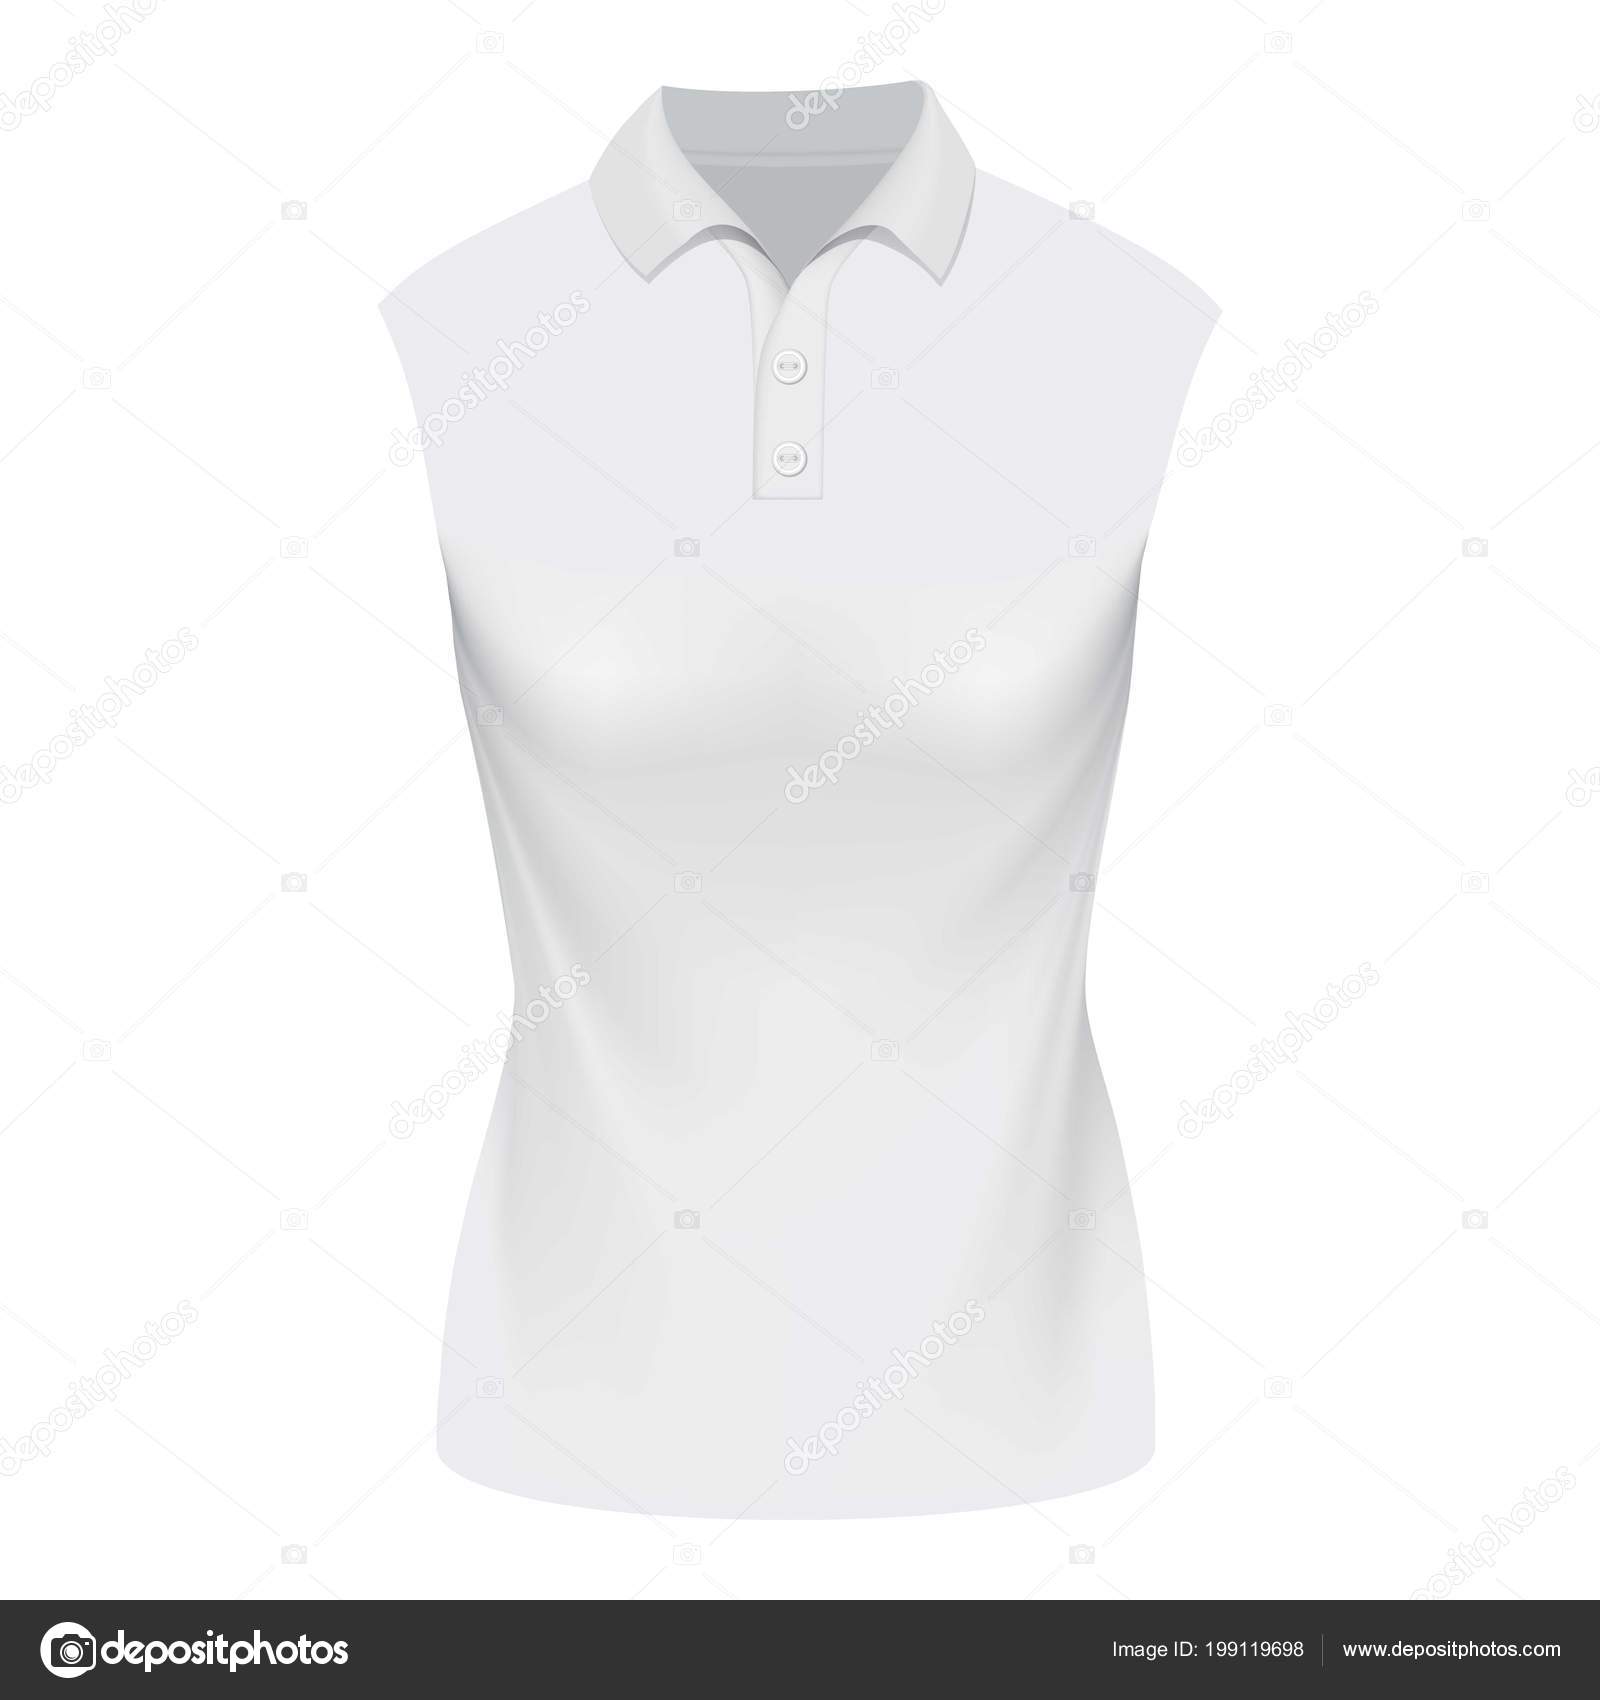 White Sleeveless Polo Tshirt Mockup Stock Vector C Ylivdesign 199119698